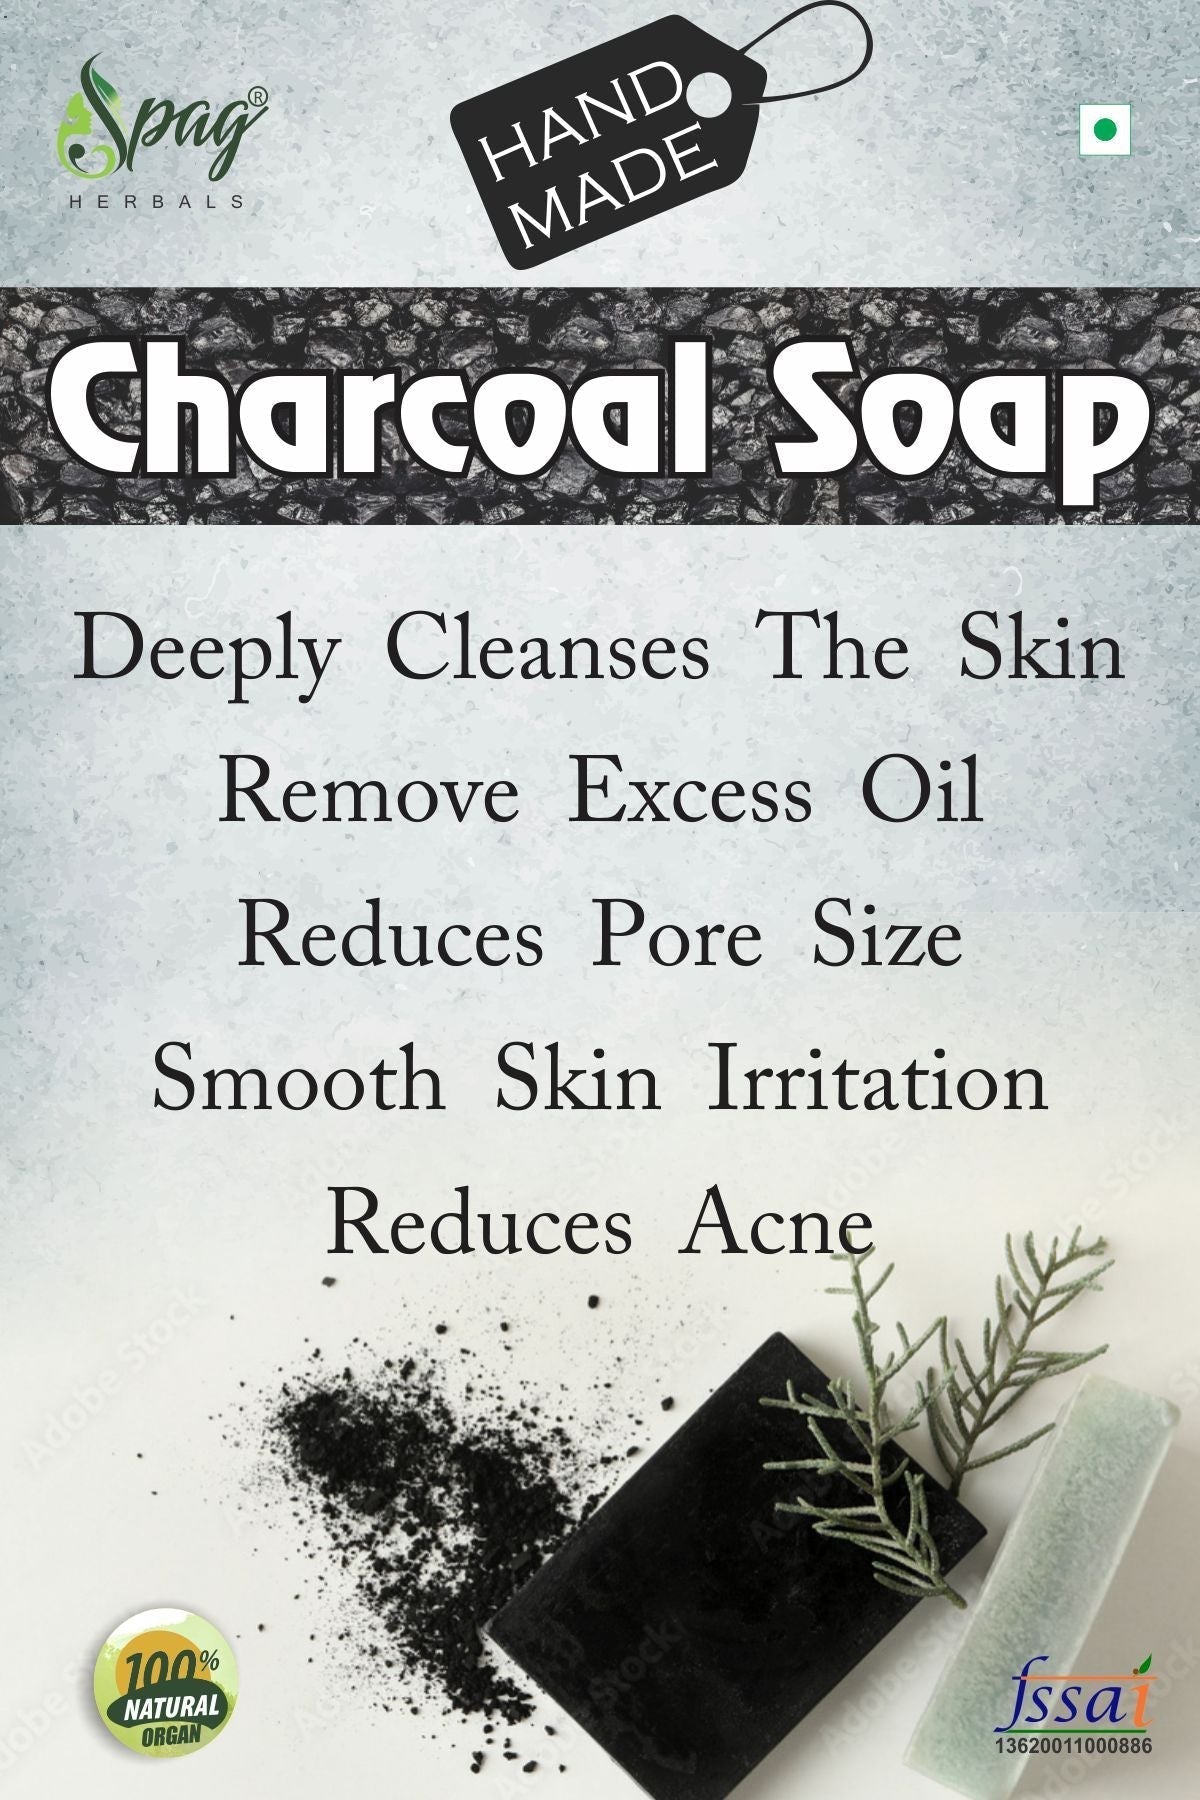 Spag Herbals Charcoal Handmade Soap For Men